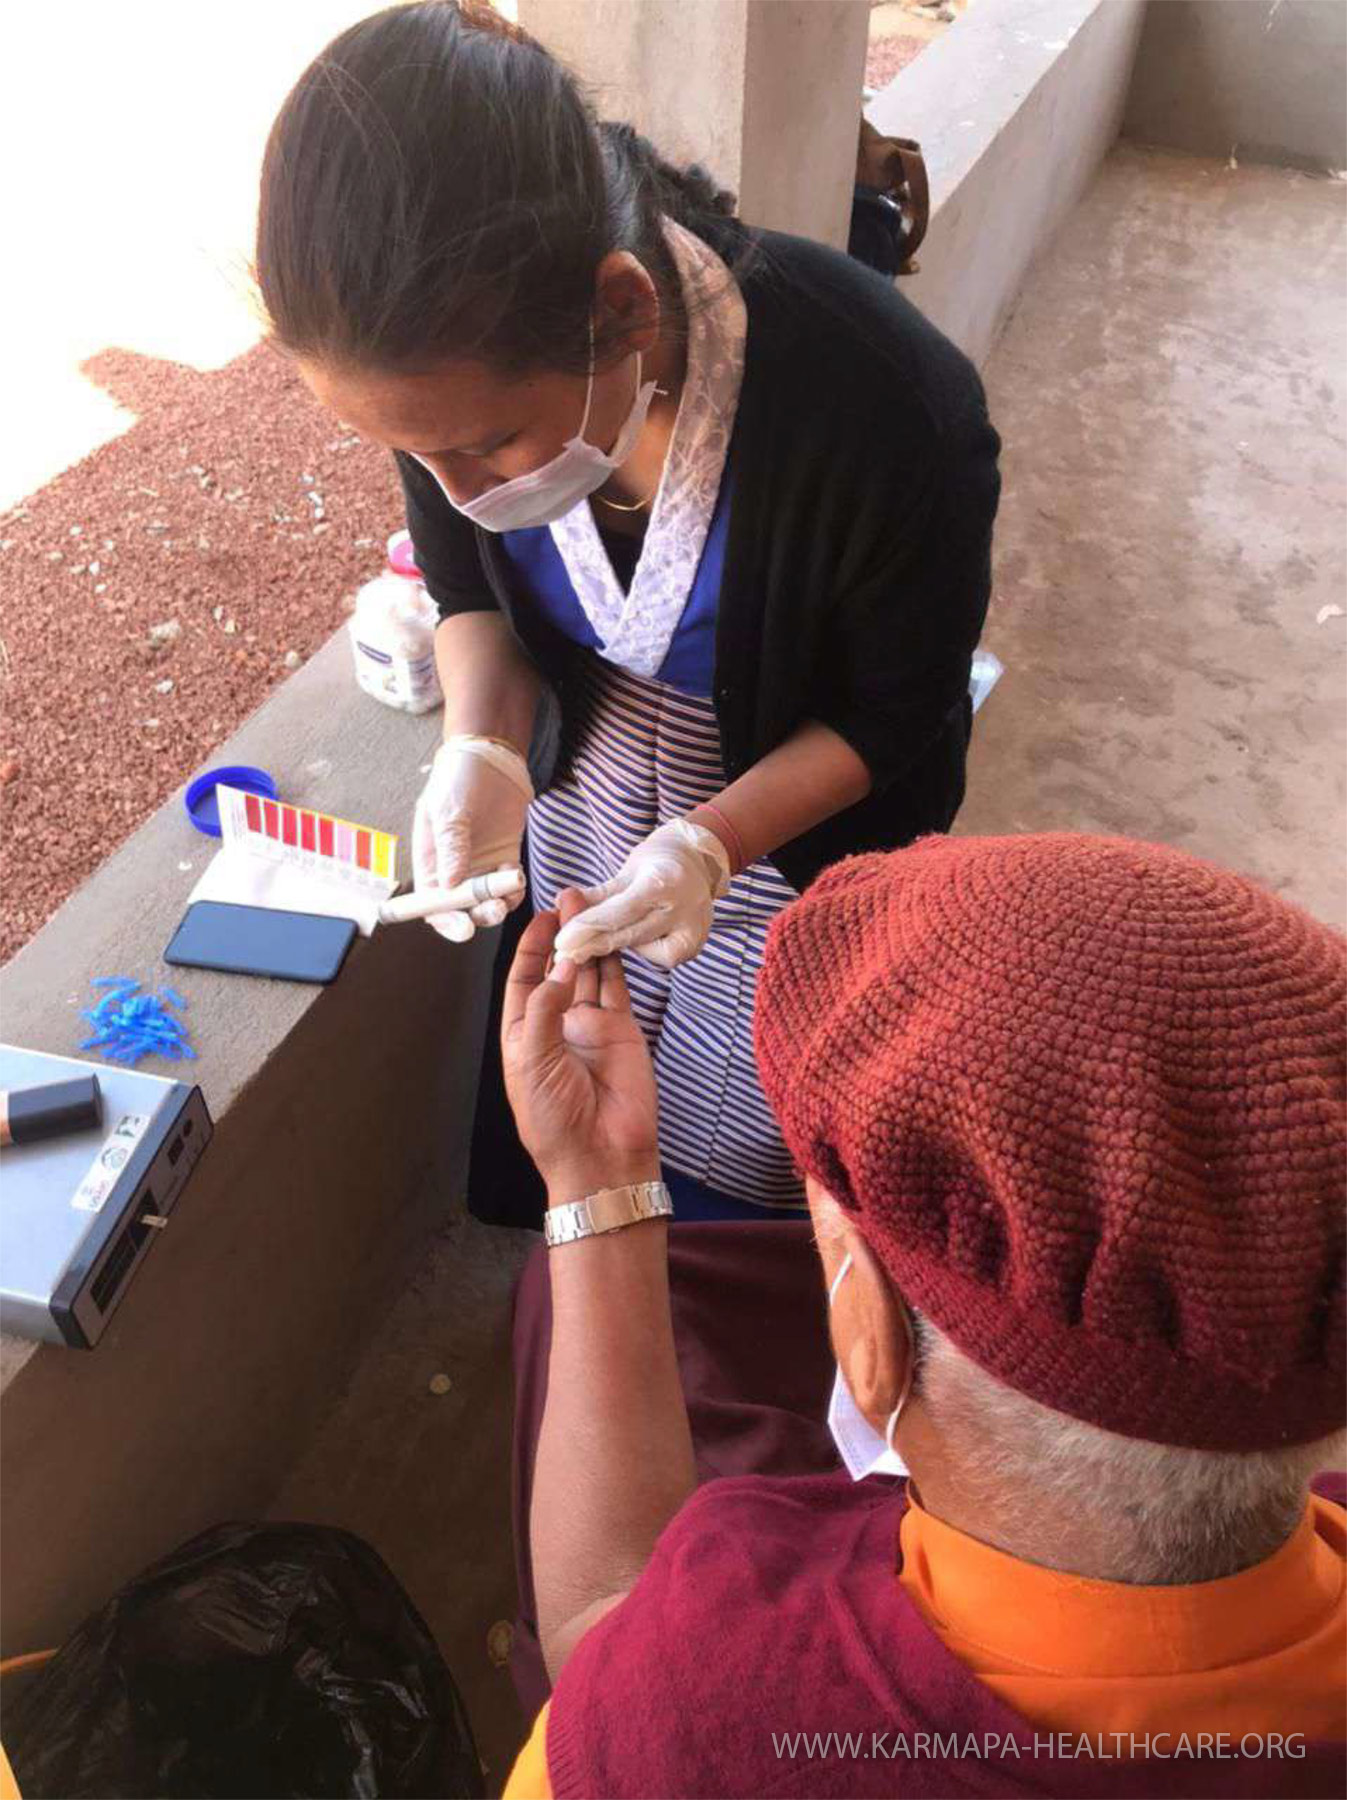 COVID-19 KHCP Medicalcamp at Dhargye Chokhor Ling Monastery Bodhgaya